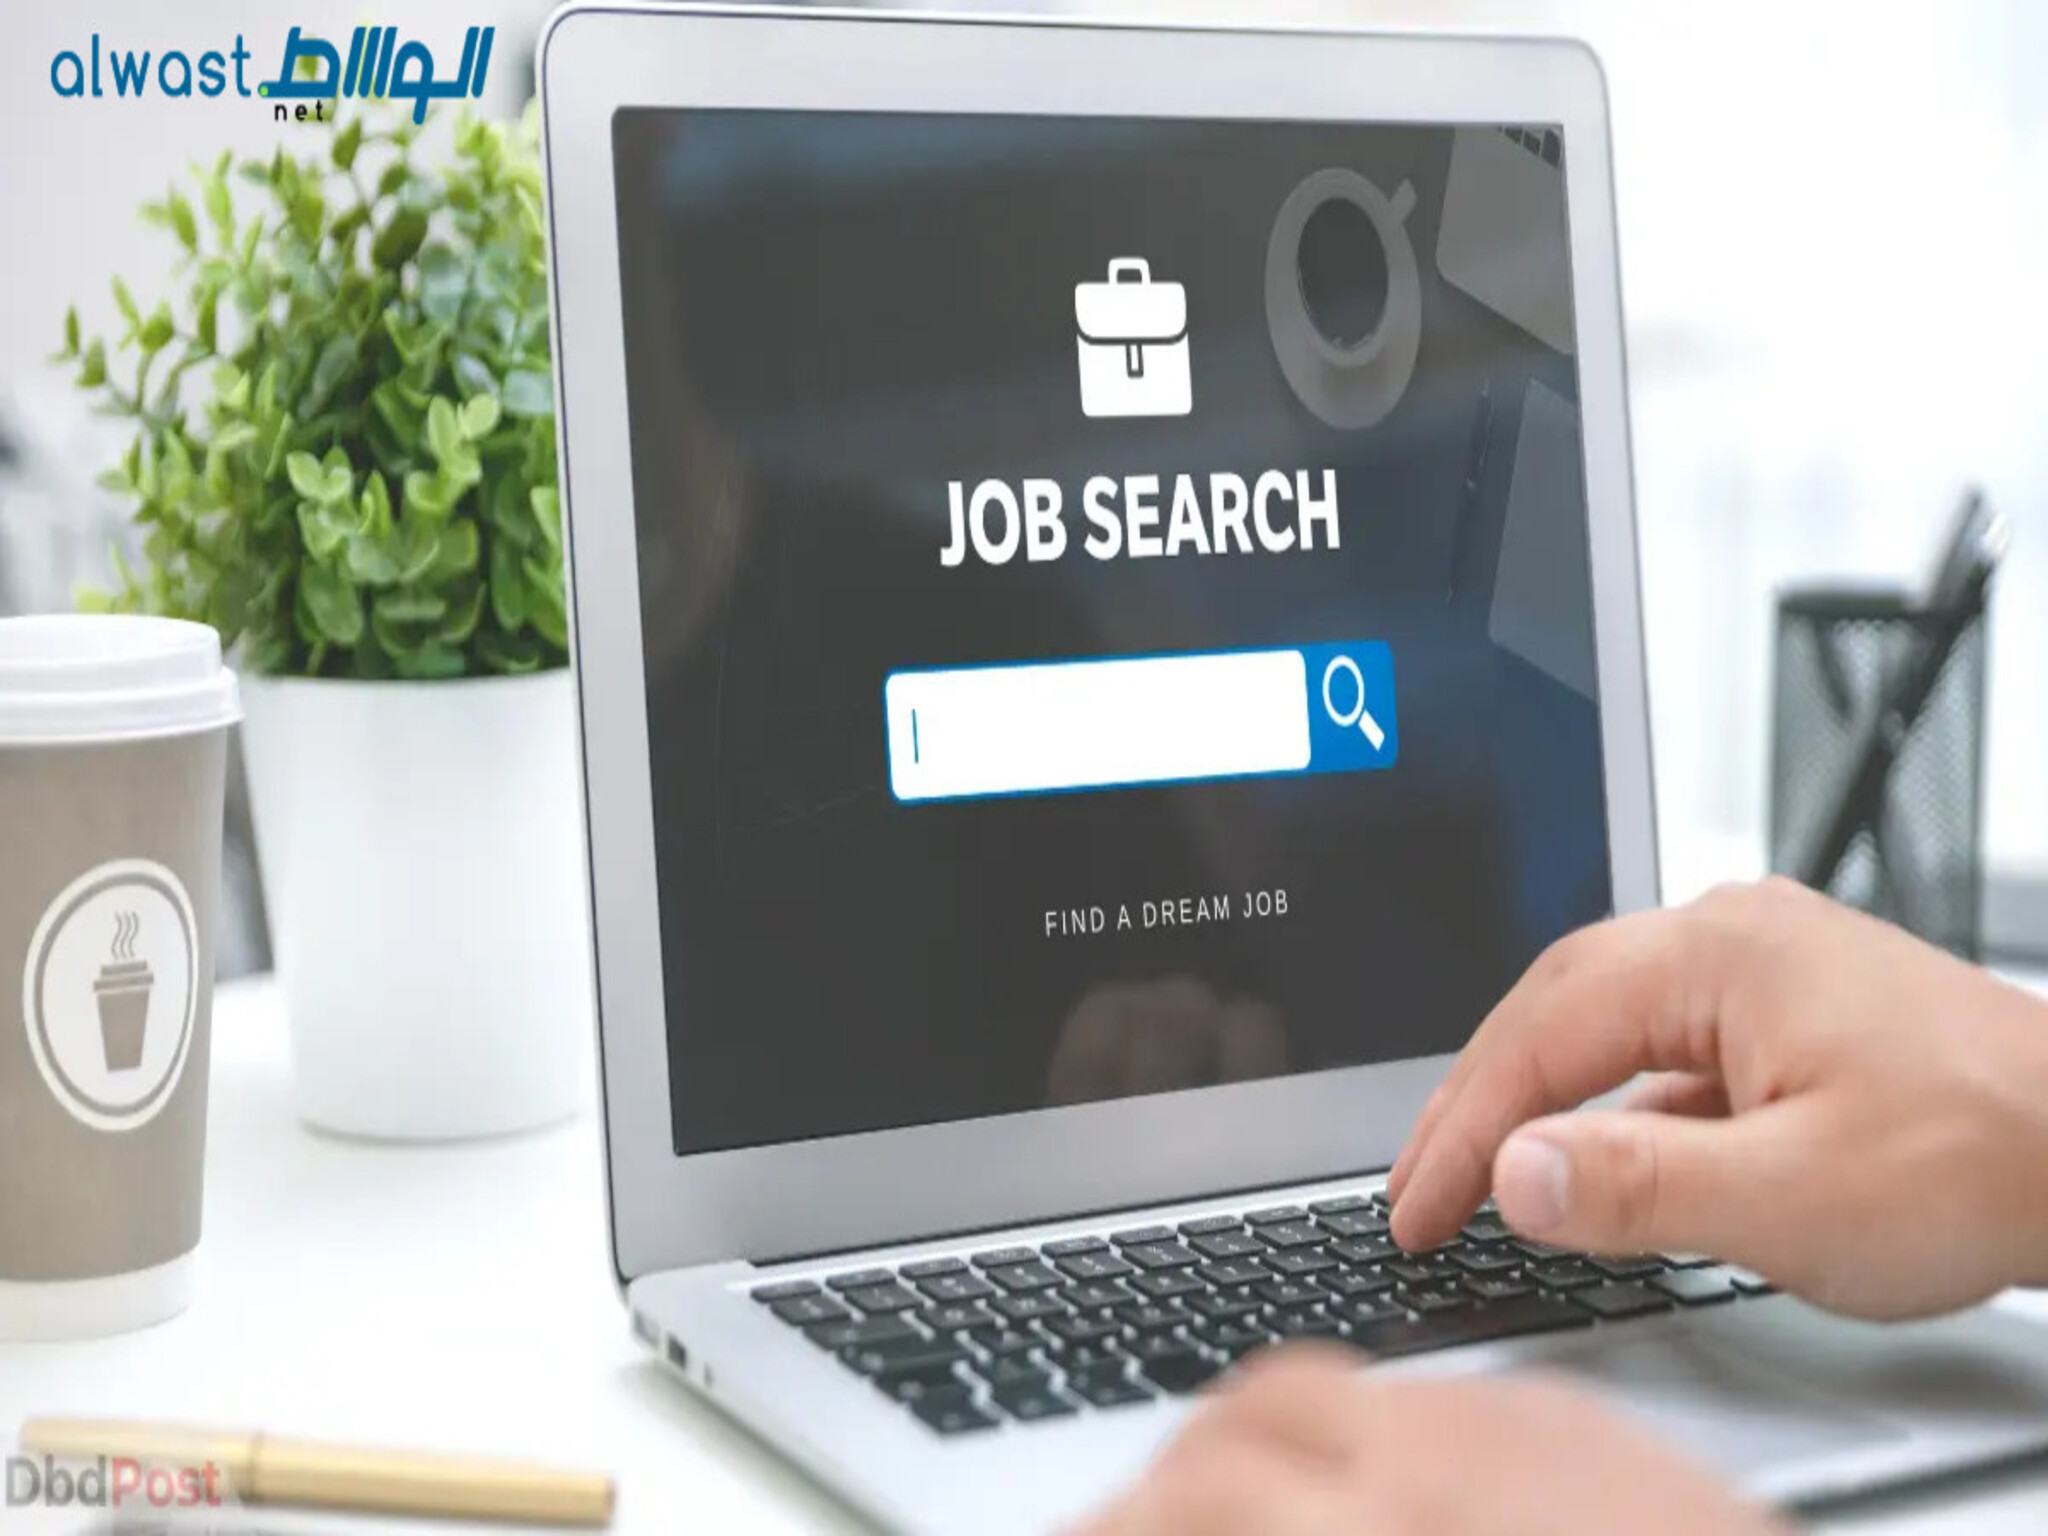 UAE Cautions residents against fake job ads on social media